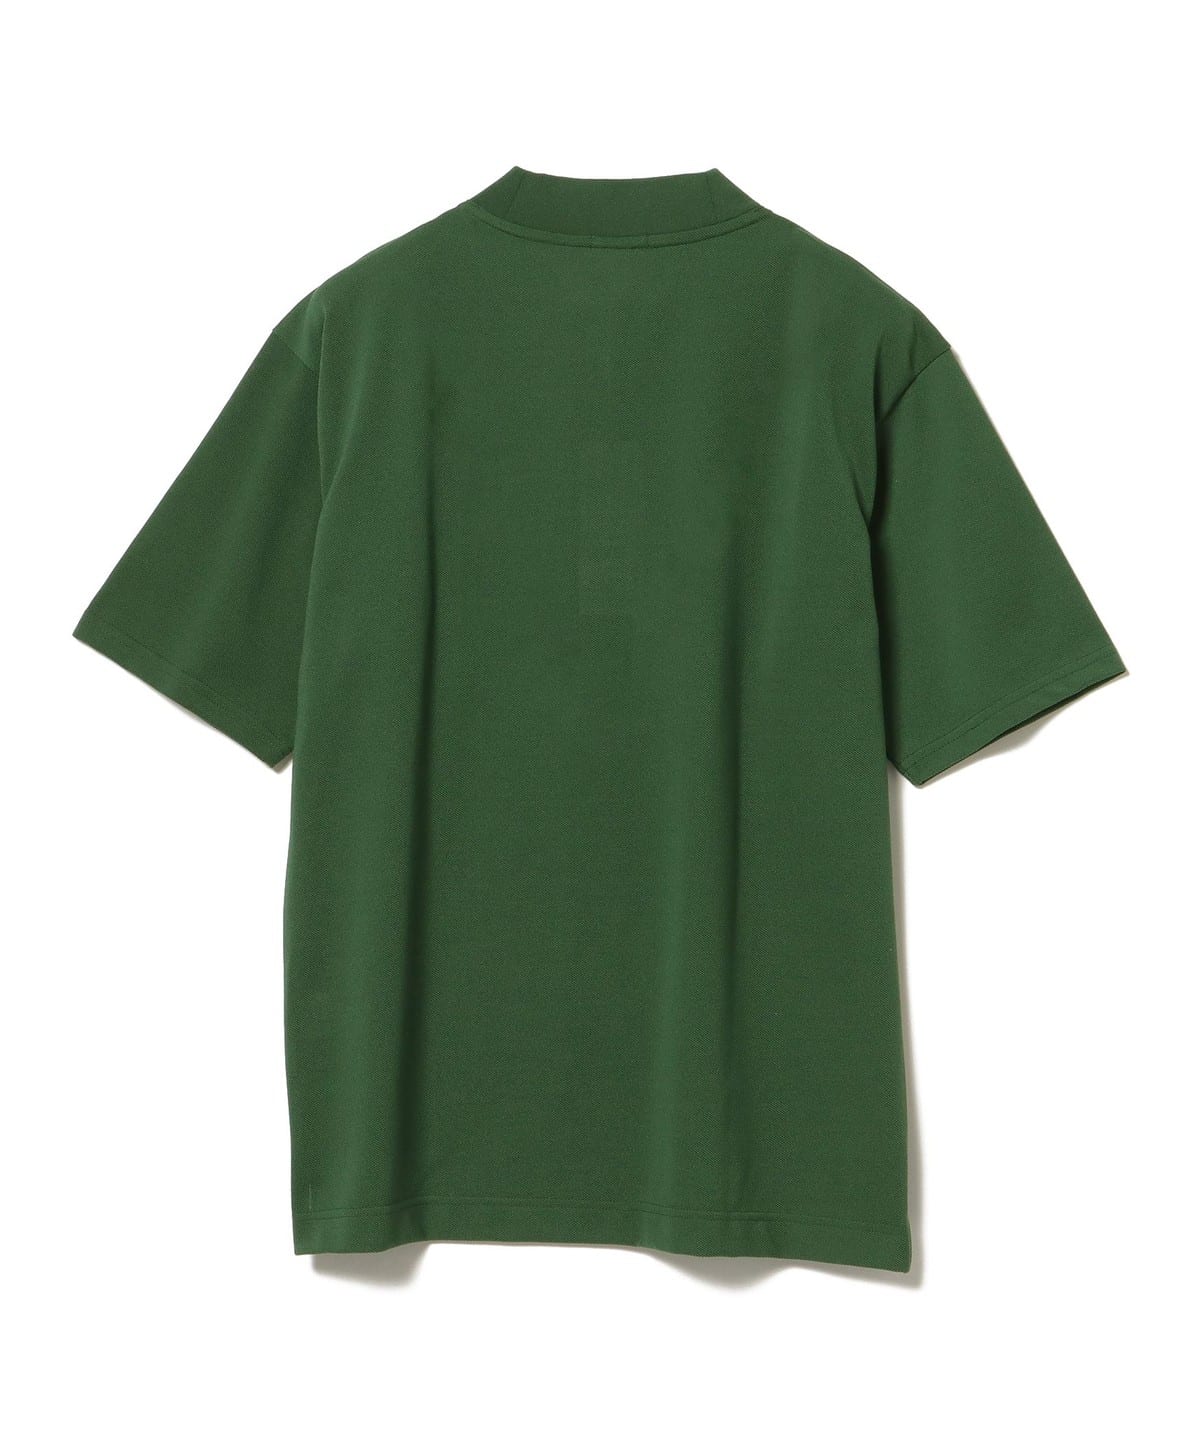 〈MEN〉Lacoste for BEAMS GOLF / 別注 鹿の子 モックネックシャツ